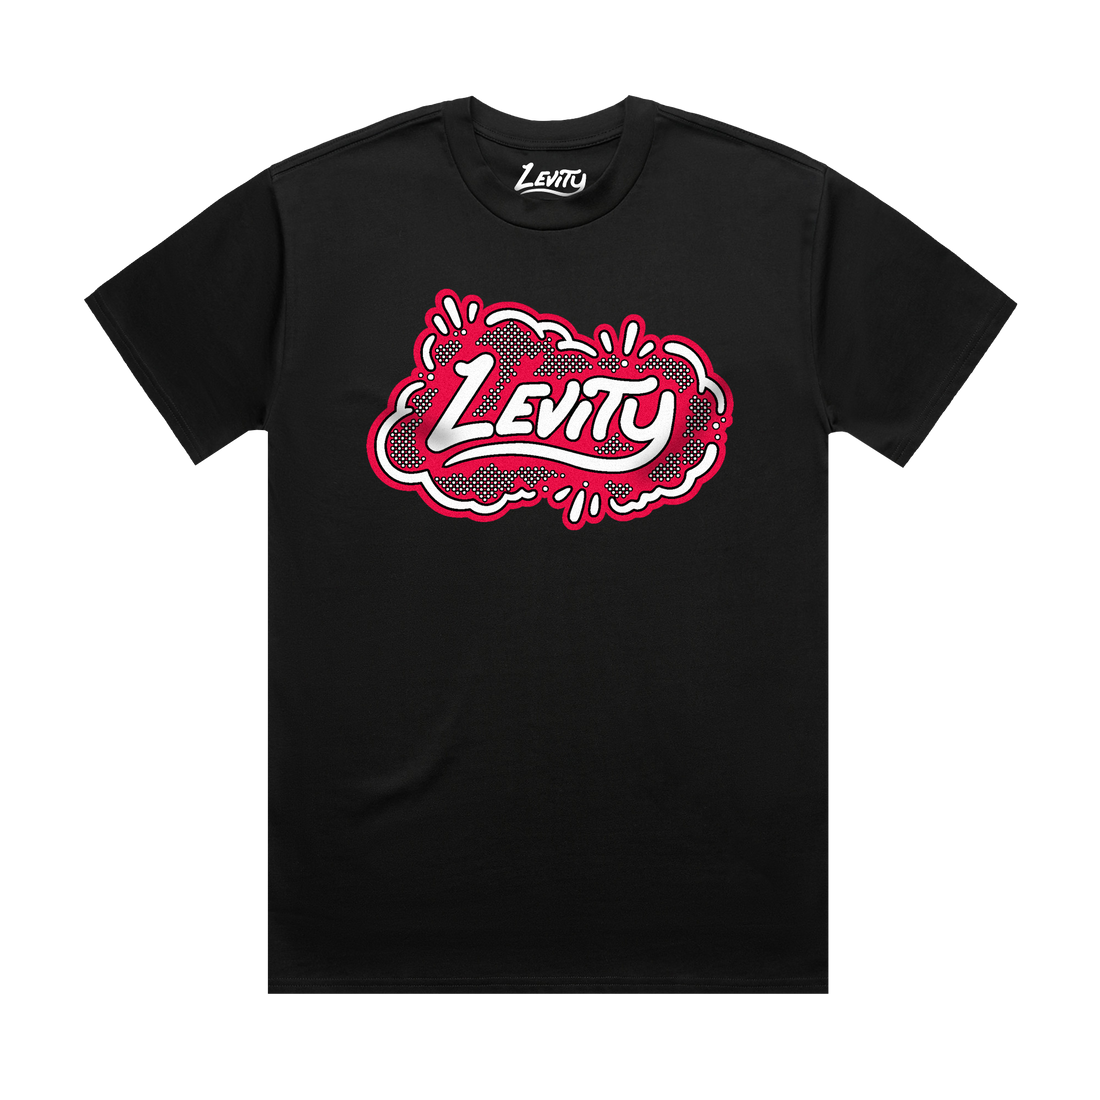 LEVITY - Cloud Logo - Black Tee